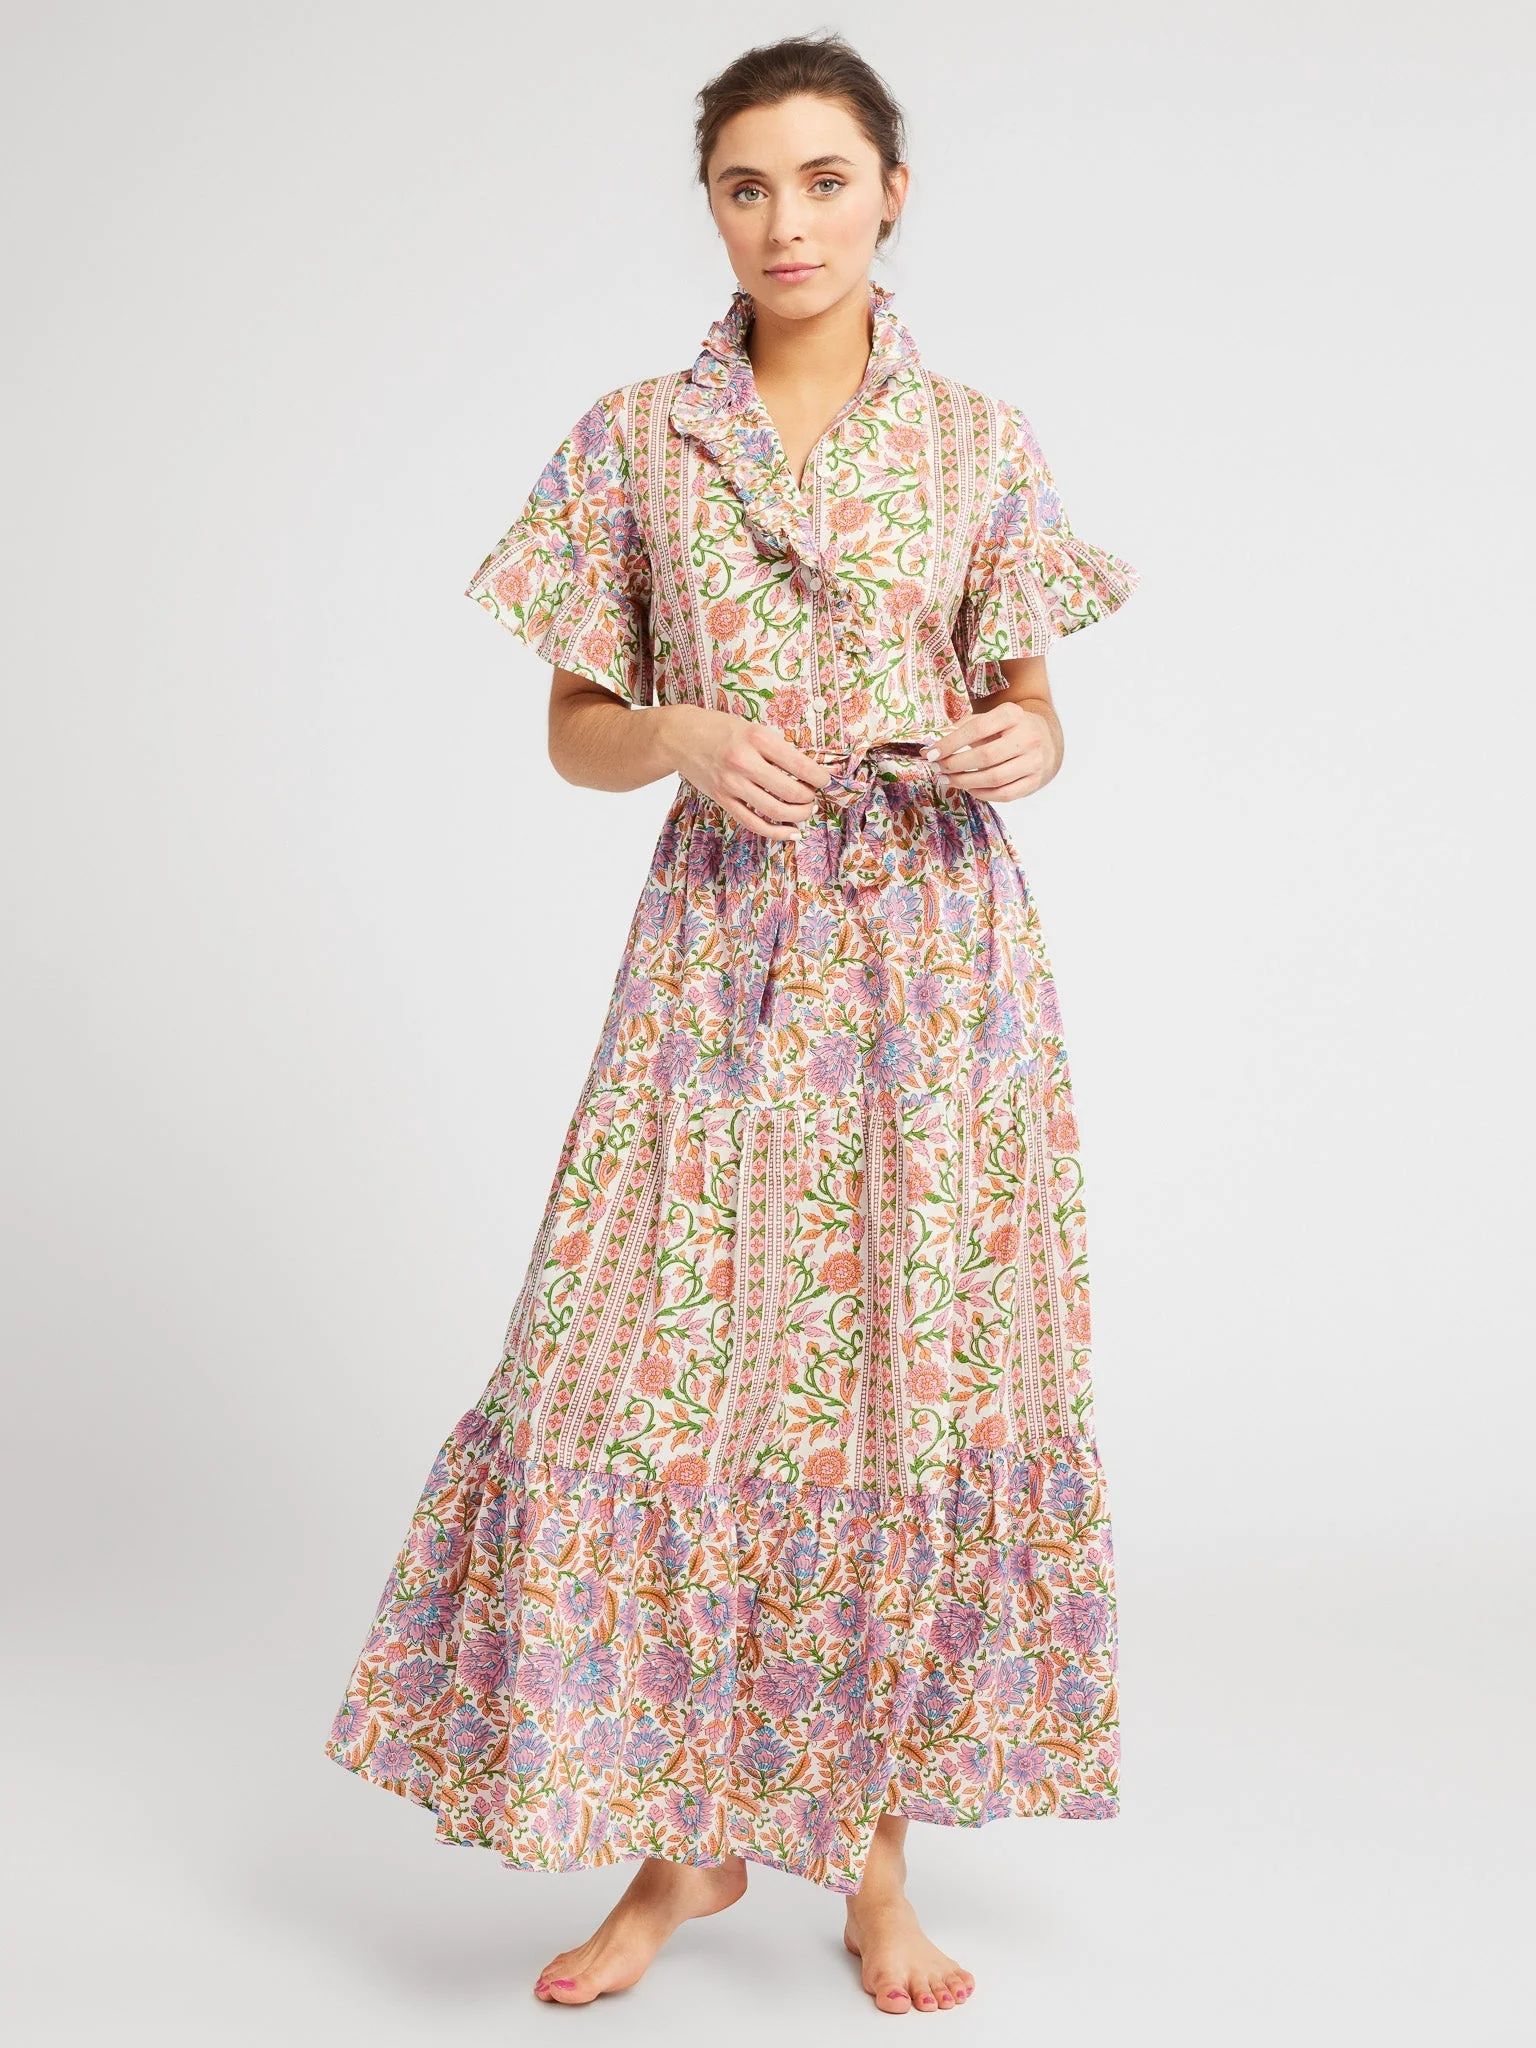 Shop Mille - Victoria Dress in Avignon Floral | Mille